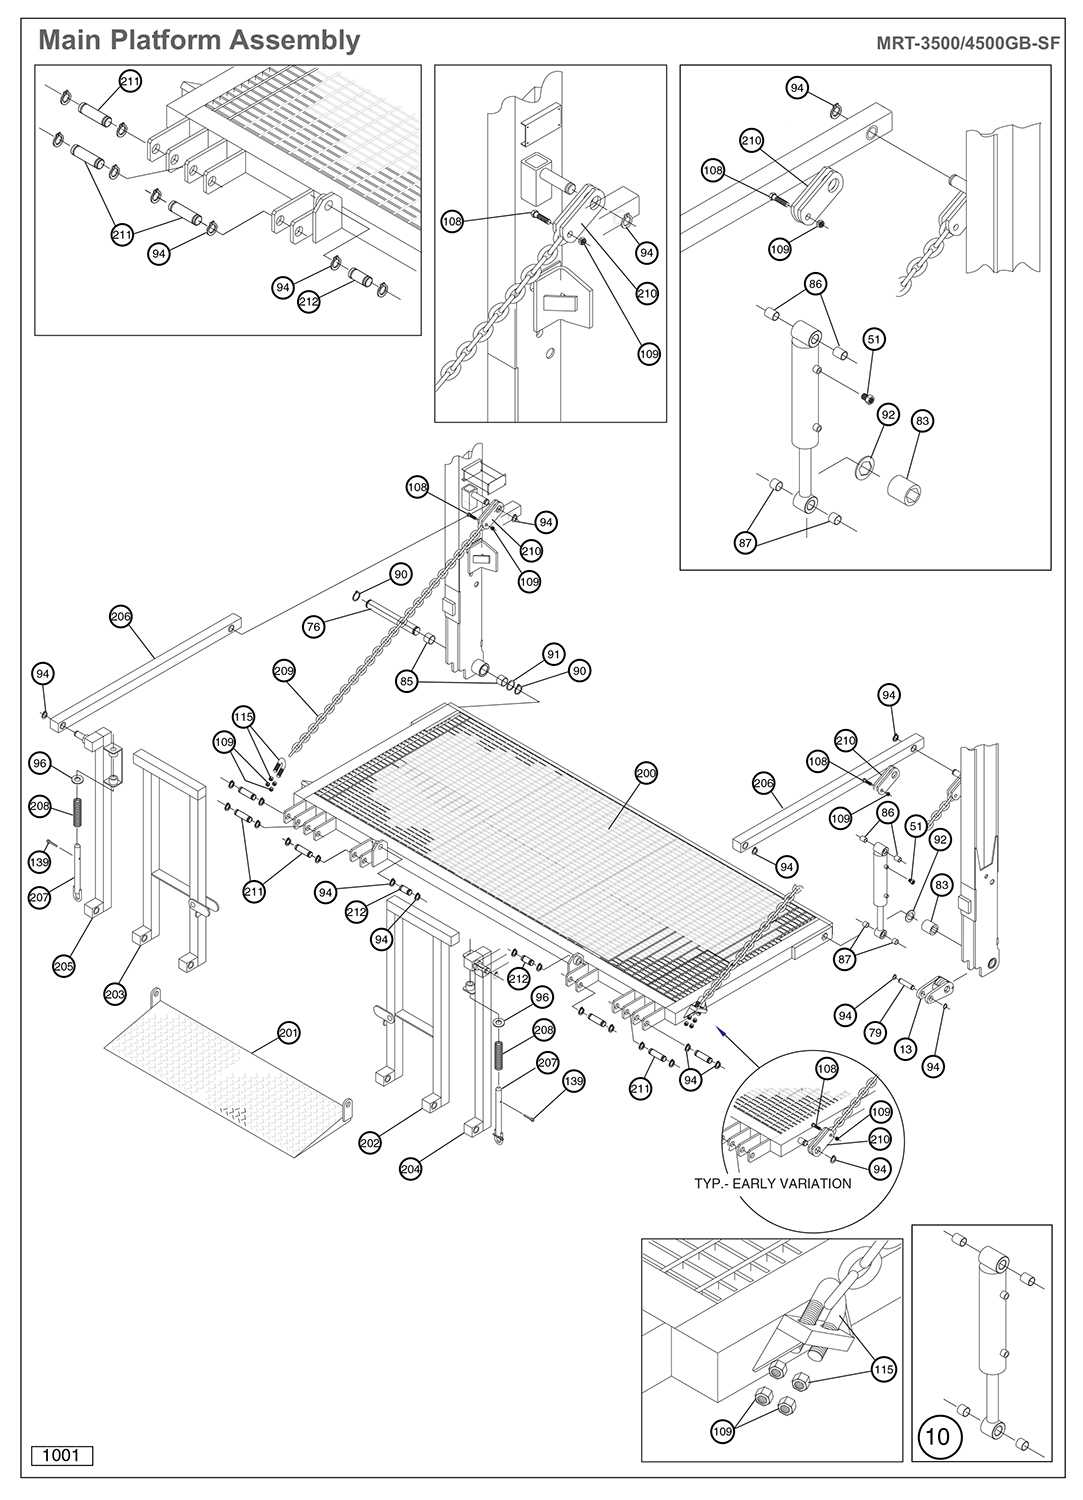 Anthony MRT-3500/4500GB-SF Main Platform Assembly Diagram